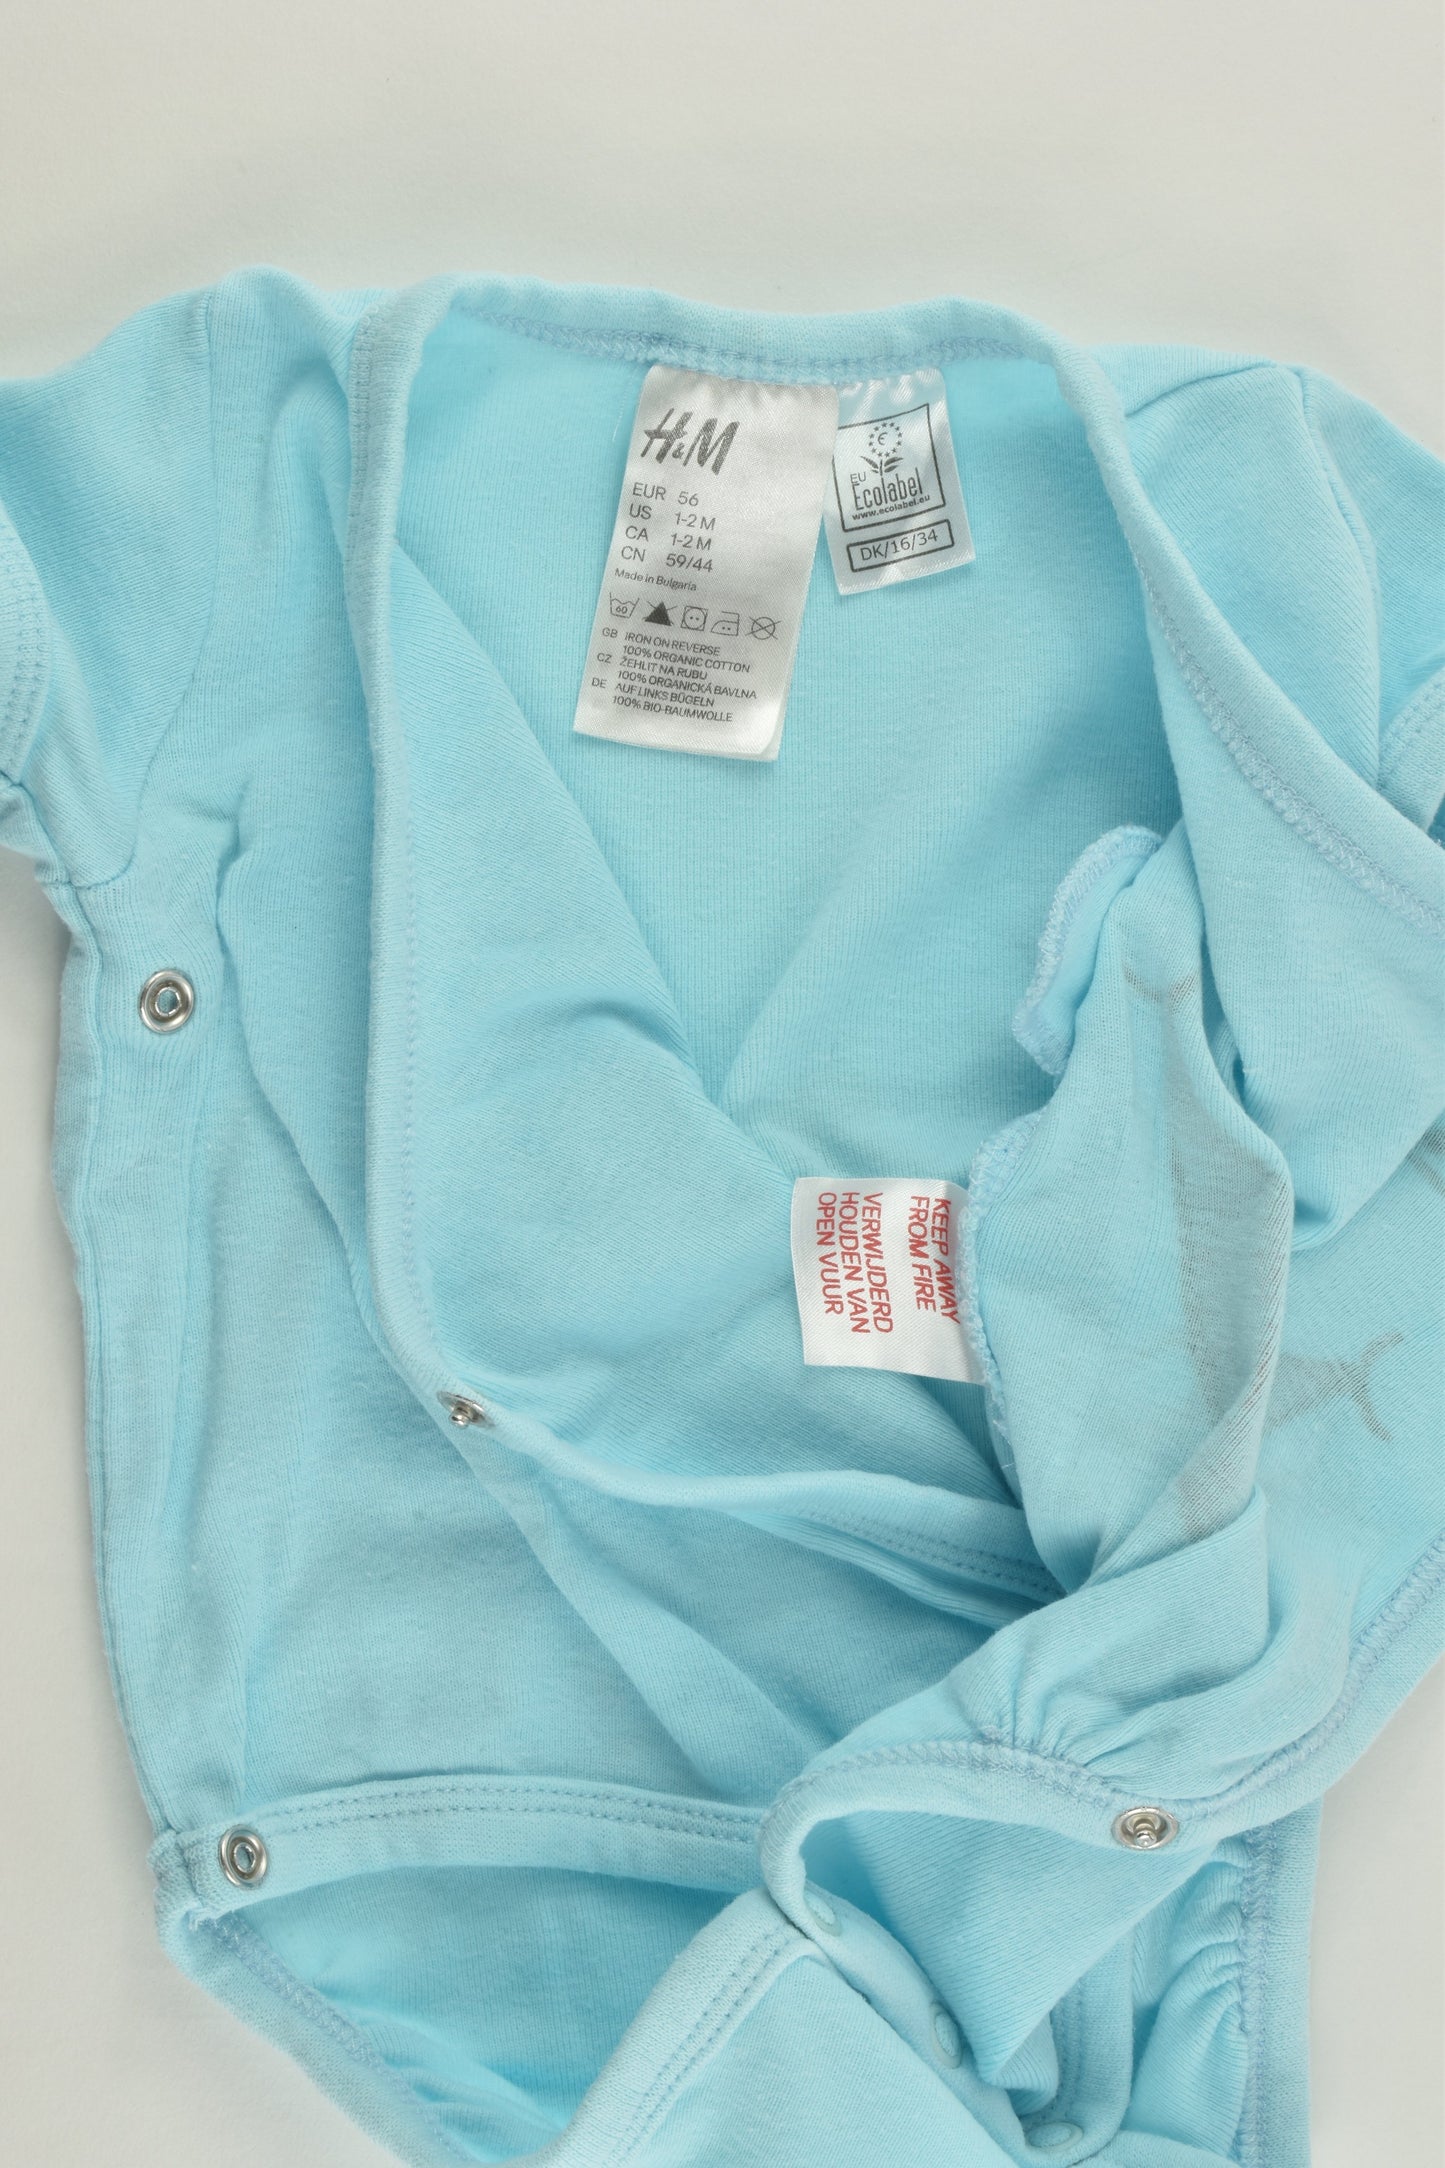 H&M Size 0000 (56 cm) Baby Face Bodysuit